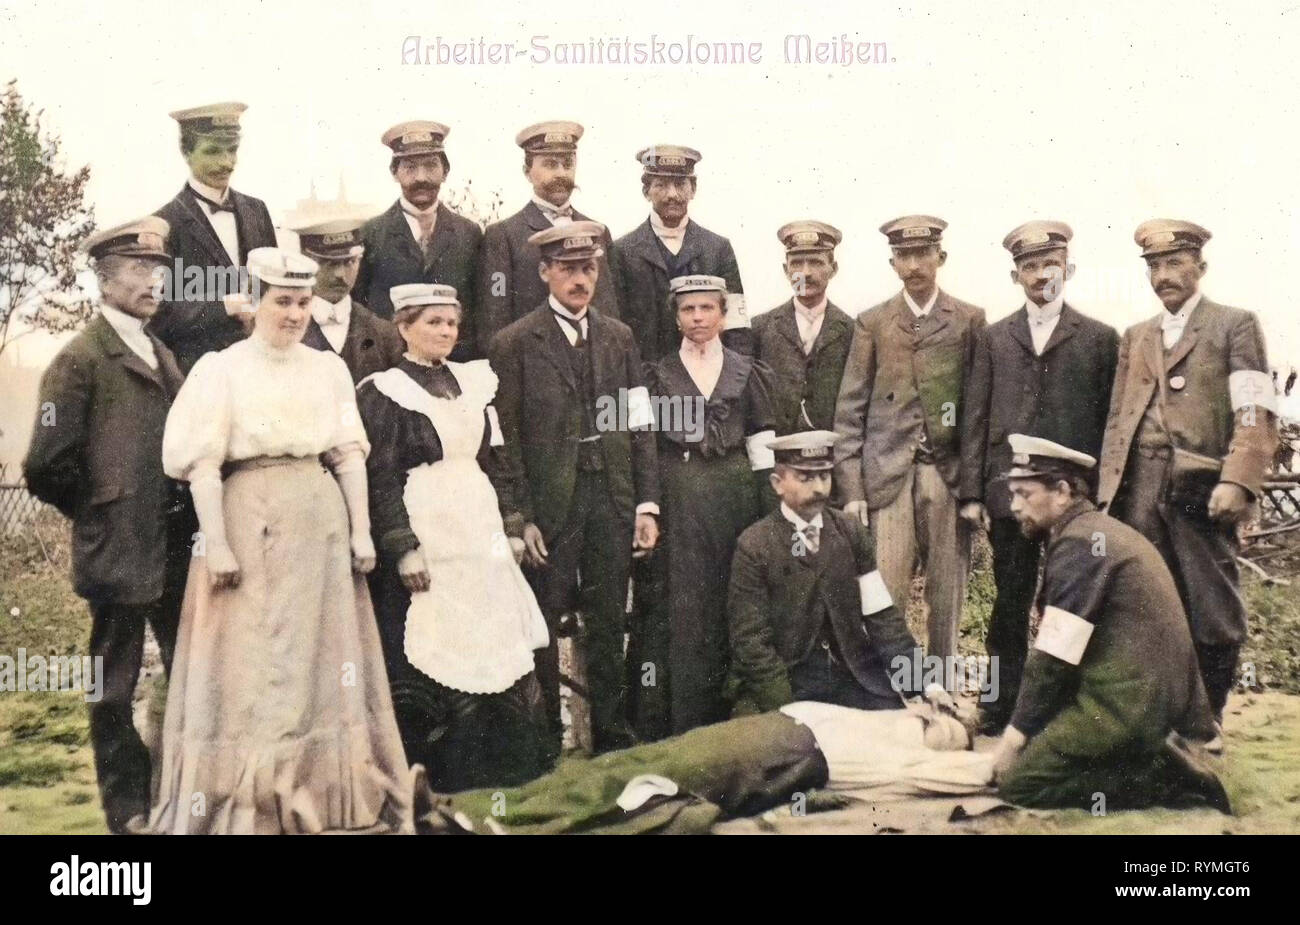 Group portraits with 17 people, Rescue, 1908, Meißen, Arbeiter Sanitätskolonne, Germany Stock Photo